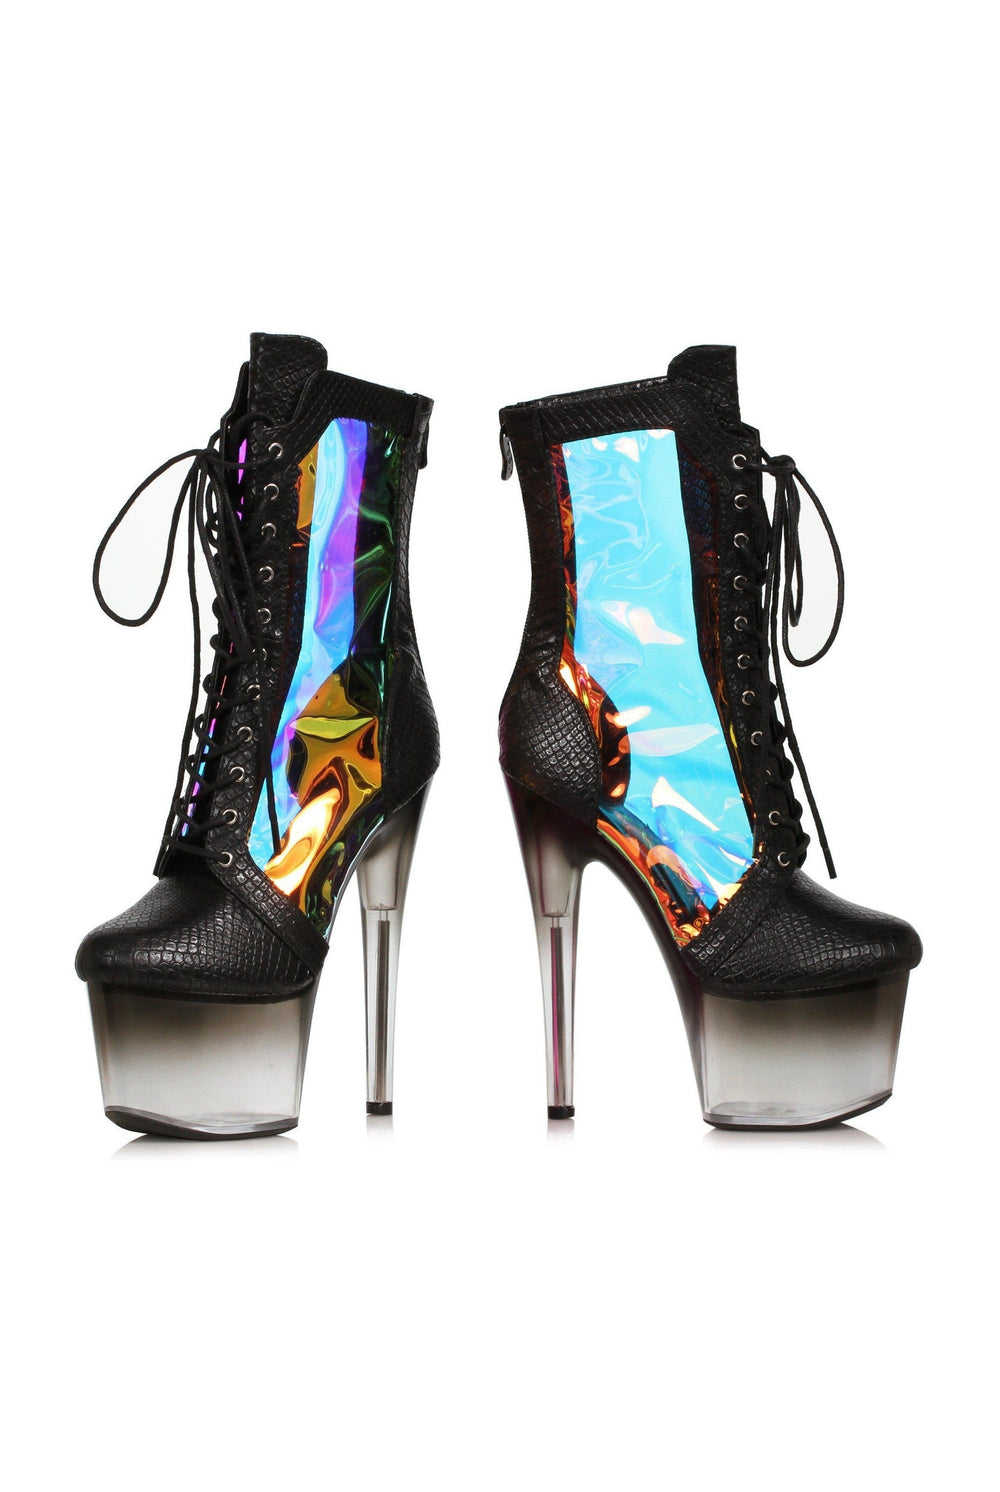 Ellie Shoes Ankle Boots Platform Stripper Shoes | Buy at Sexyshoes.com